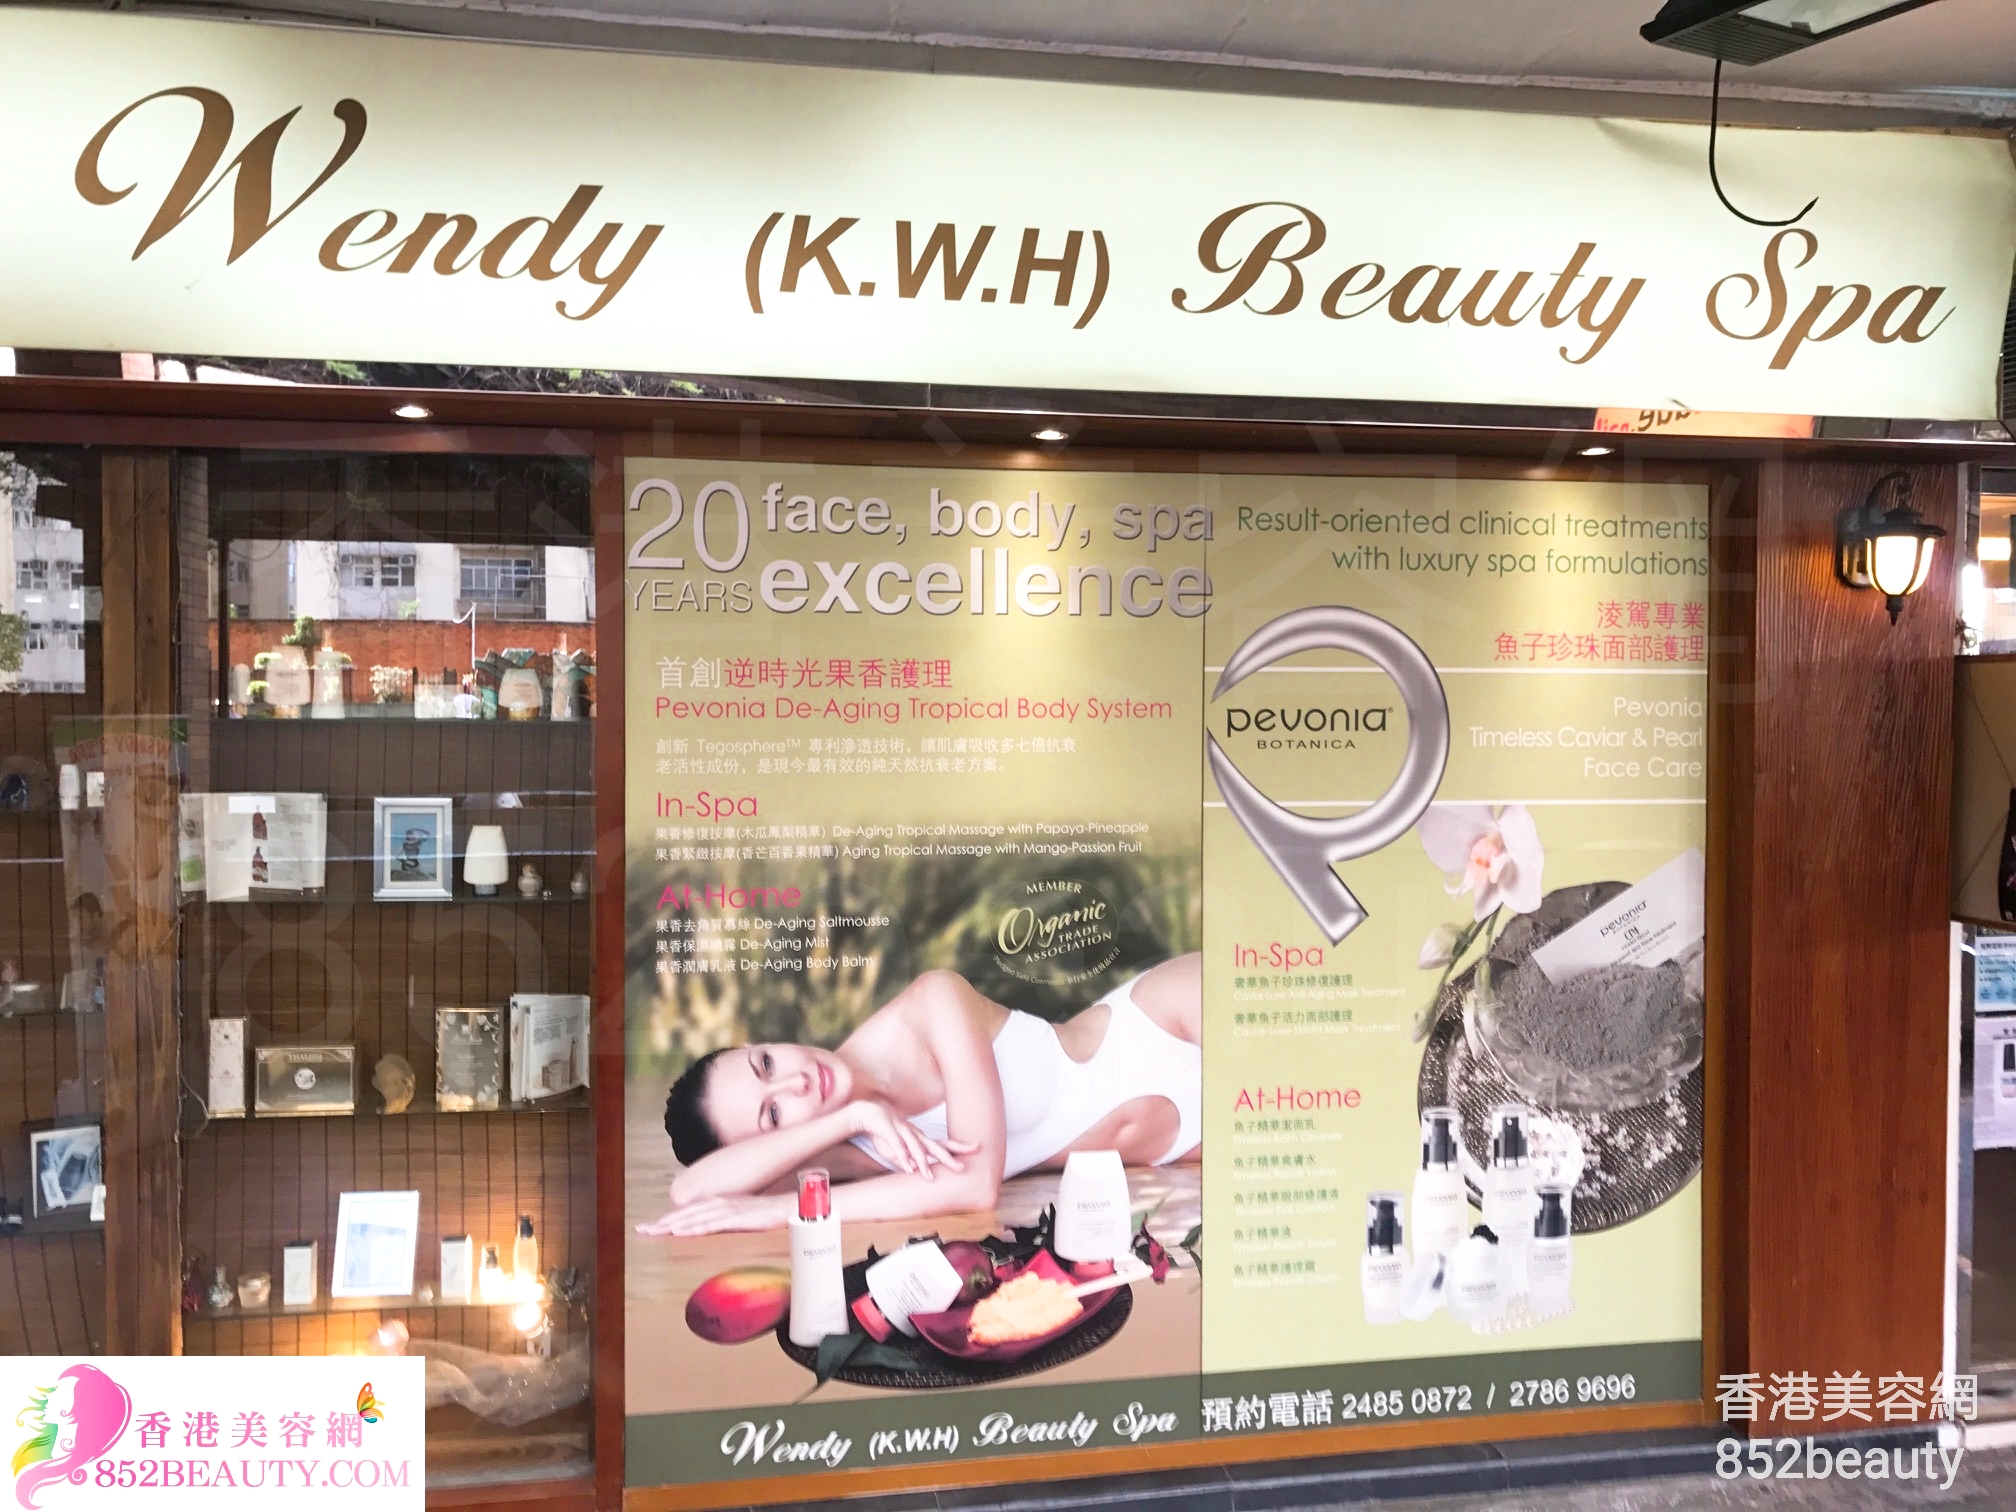 修眉/眼睫毛: Wendy (K.W.H) Beauty Spa